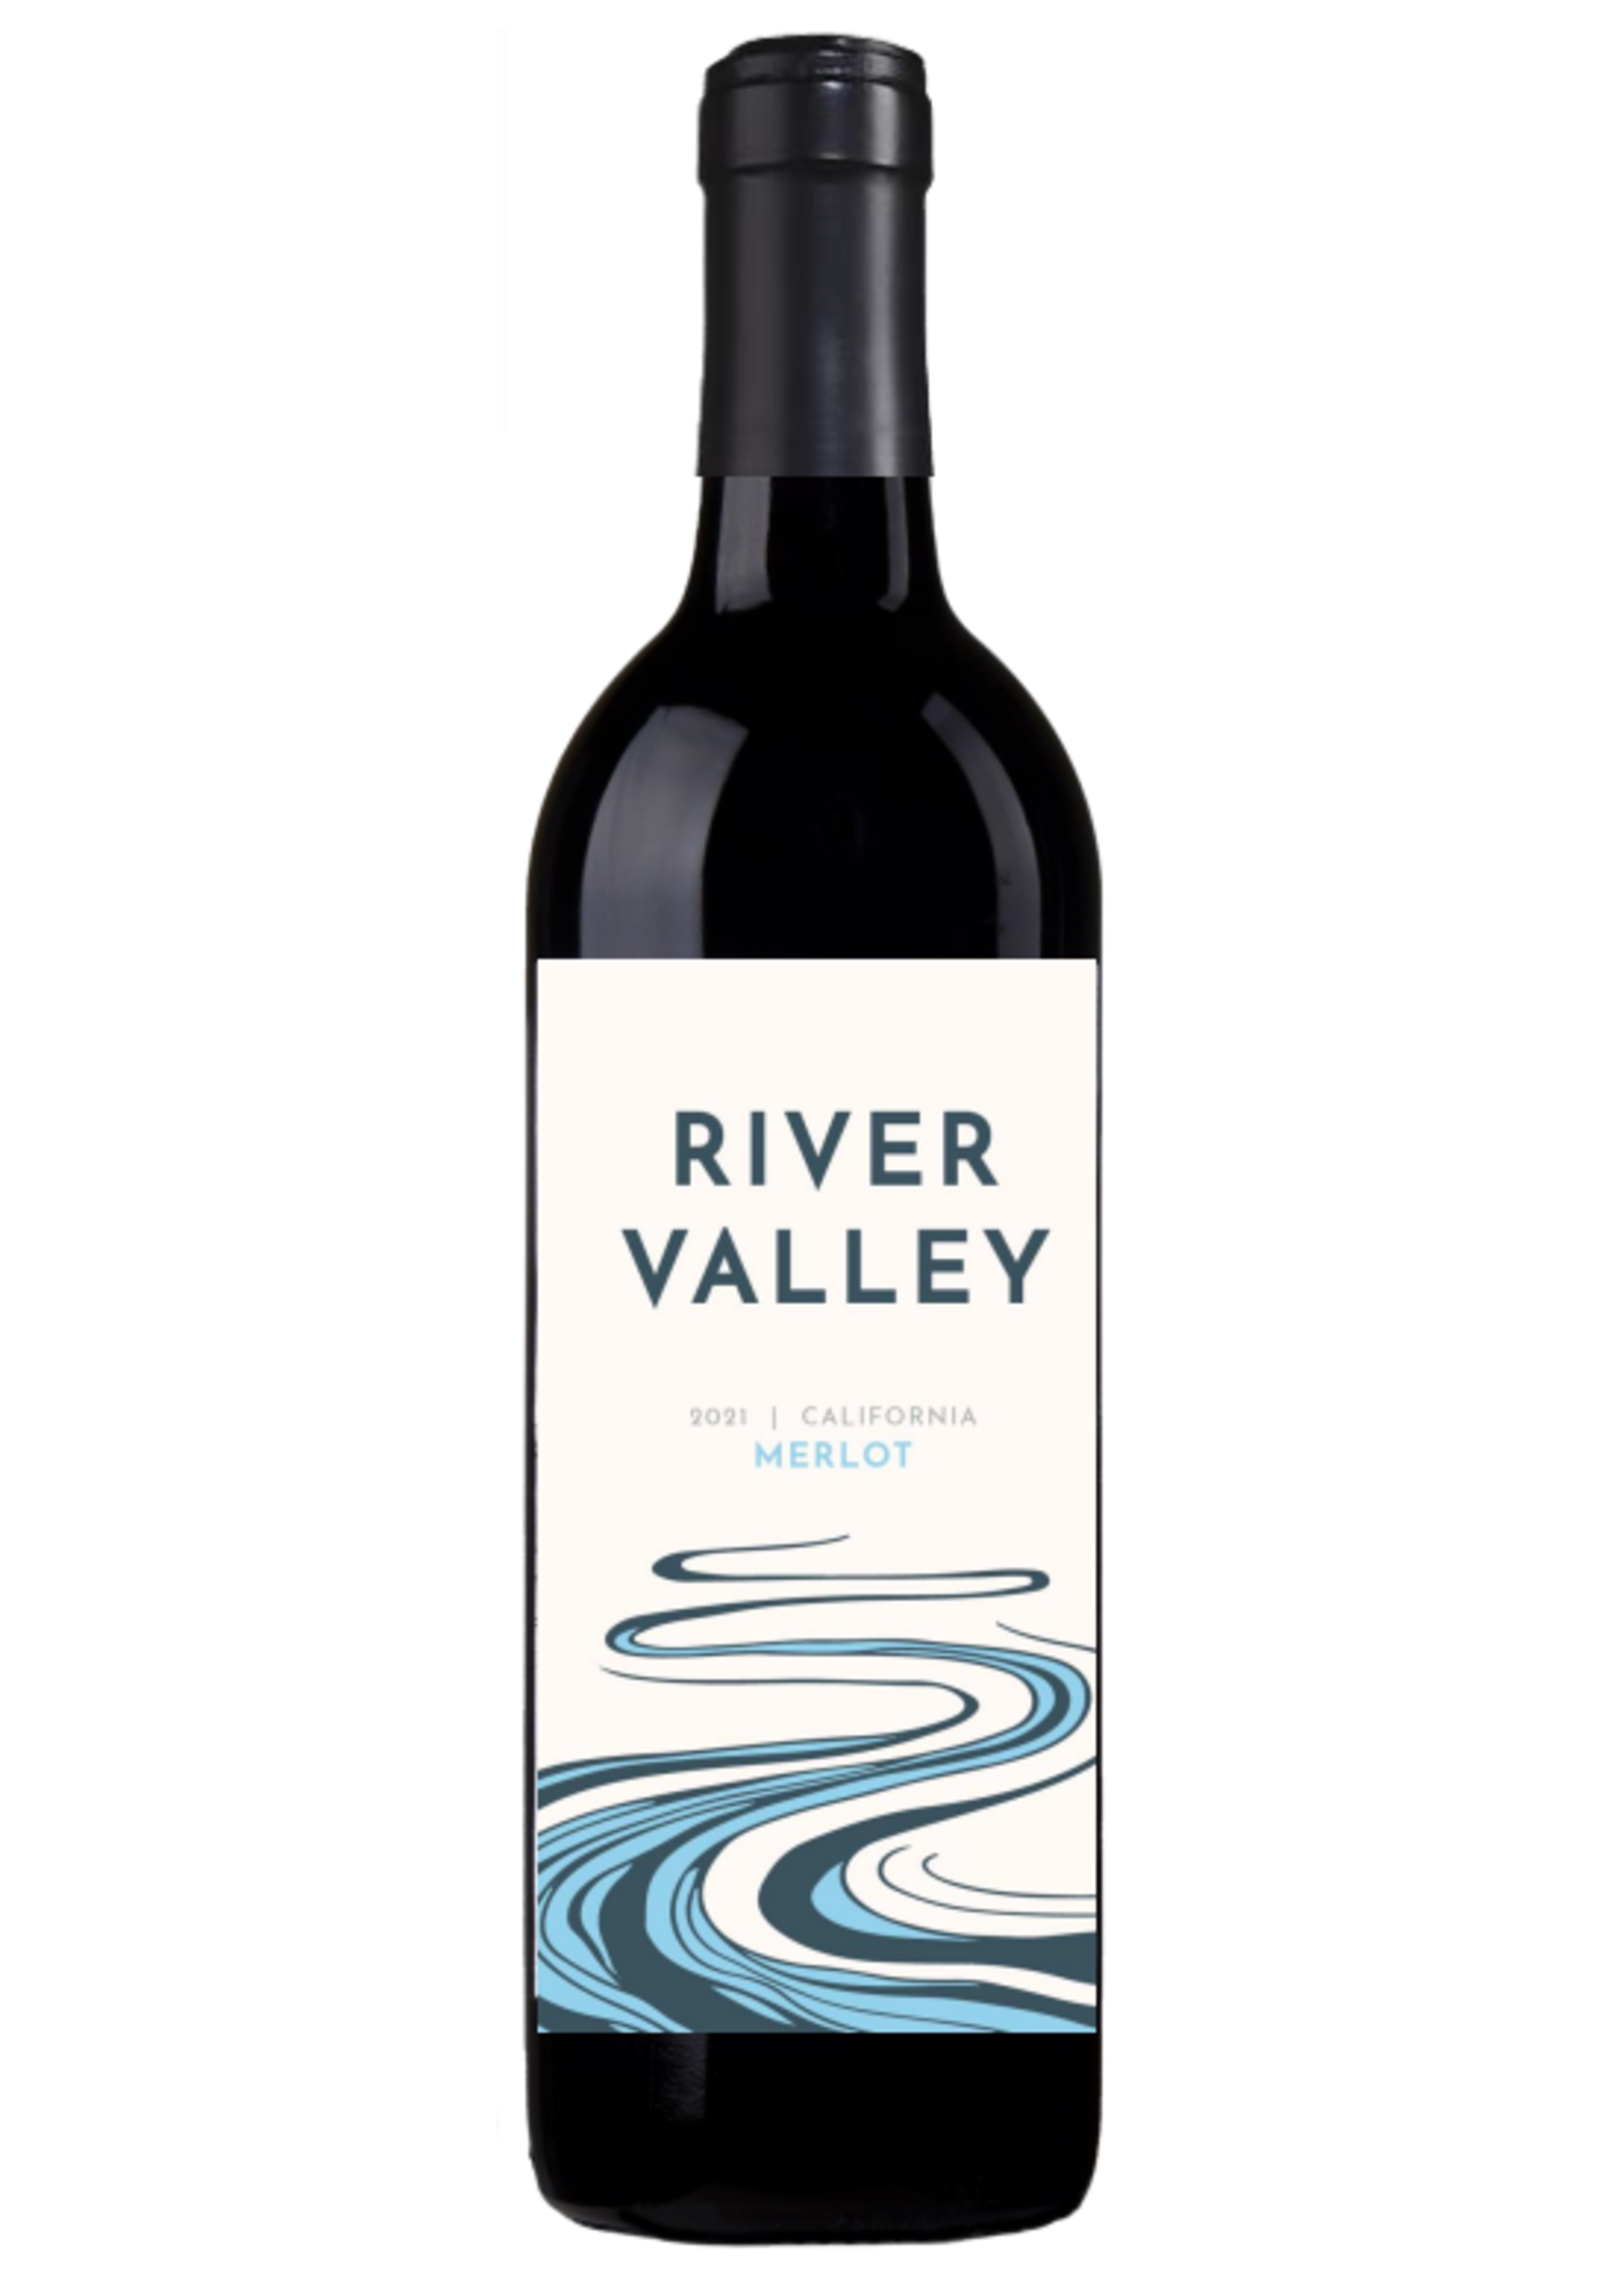 River Valley Clos LaChance / River Valley Merlot California 2021 / 750mL